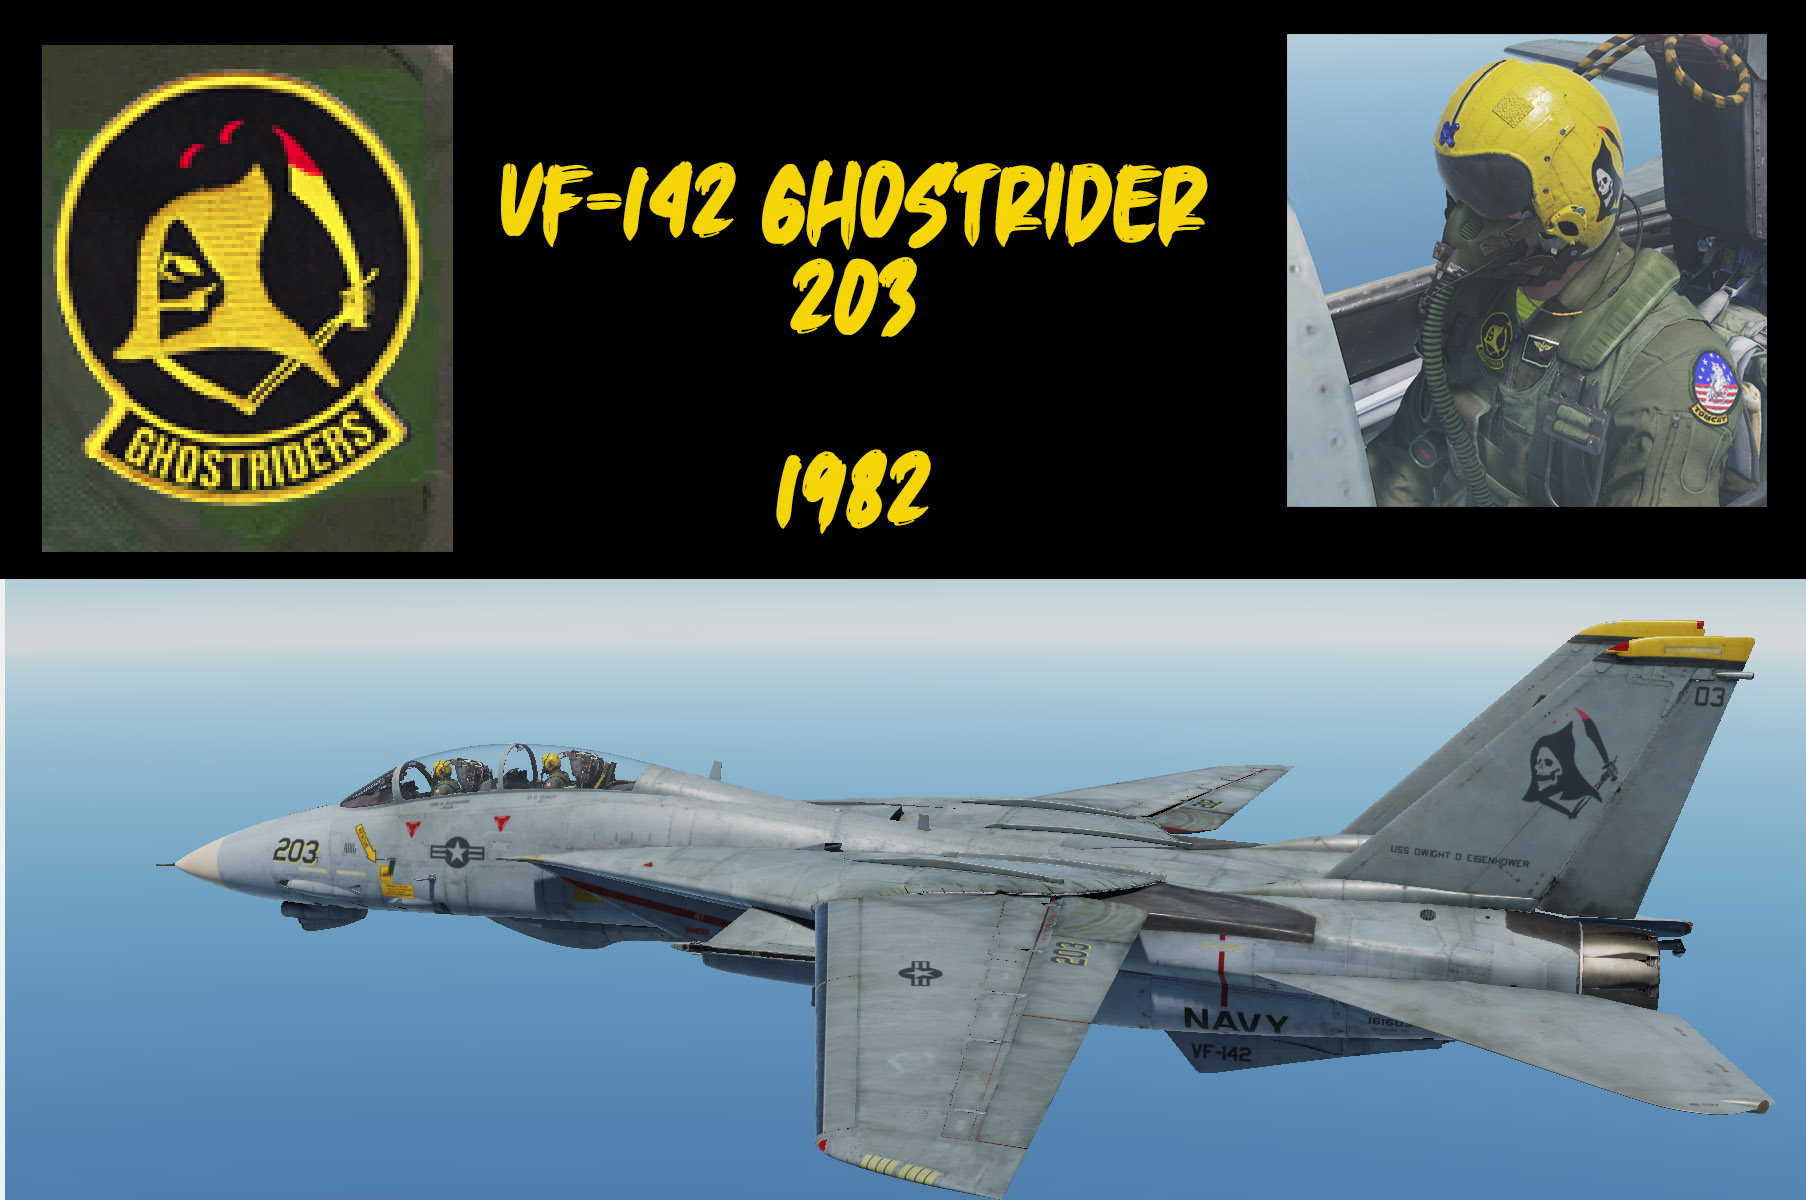 VF-142 GHOSTRIDERS - 203